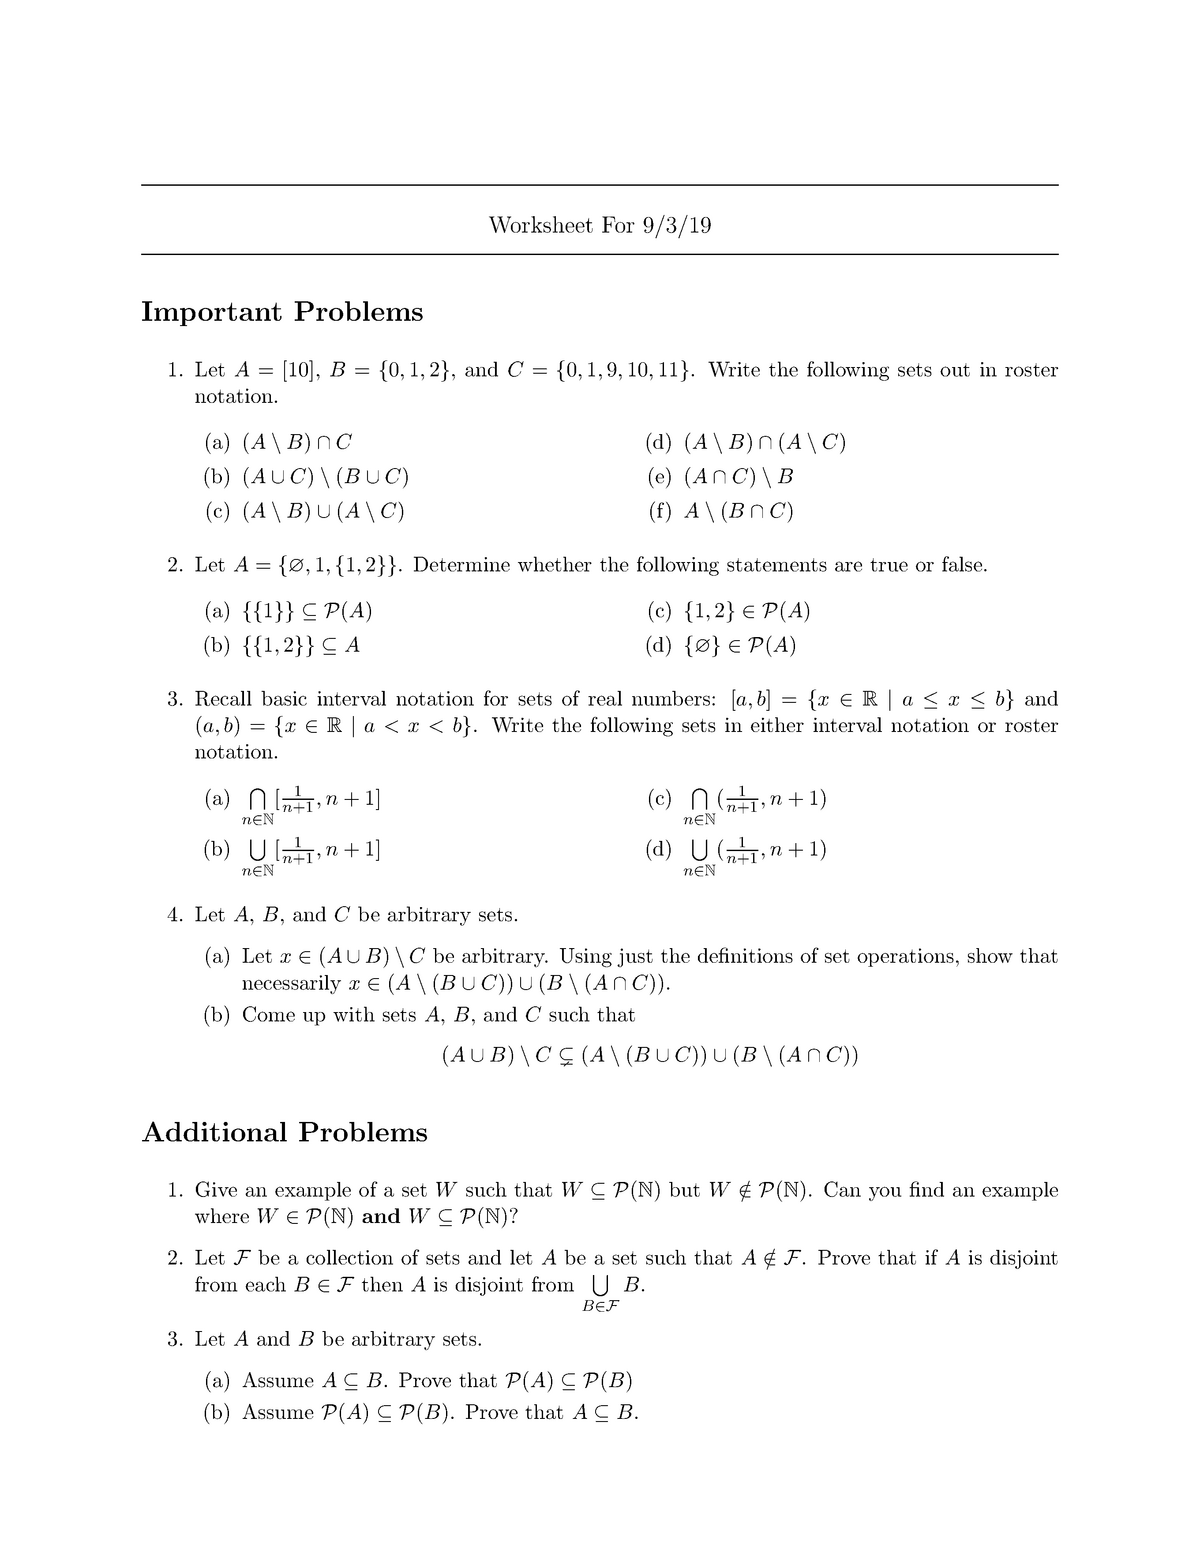 Worksheet 0903 Worksheet For 9 3 Important Problems Leta 10 B 0 1 2 Andc 0 1 9 Studocu